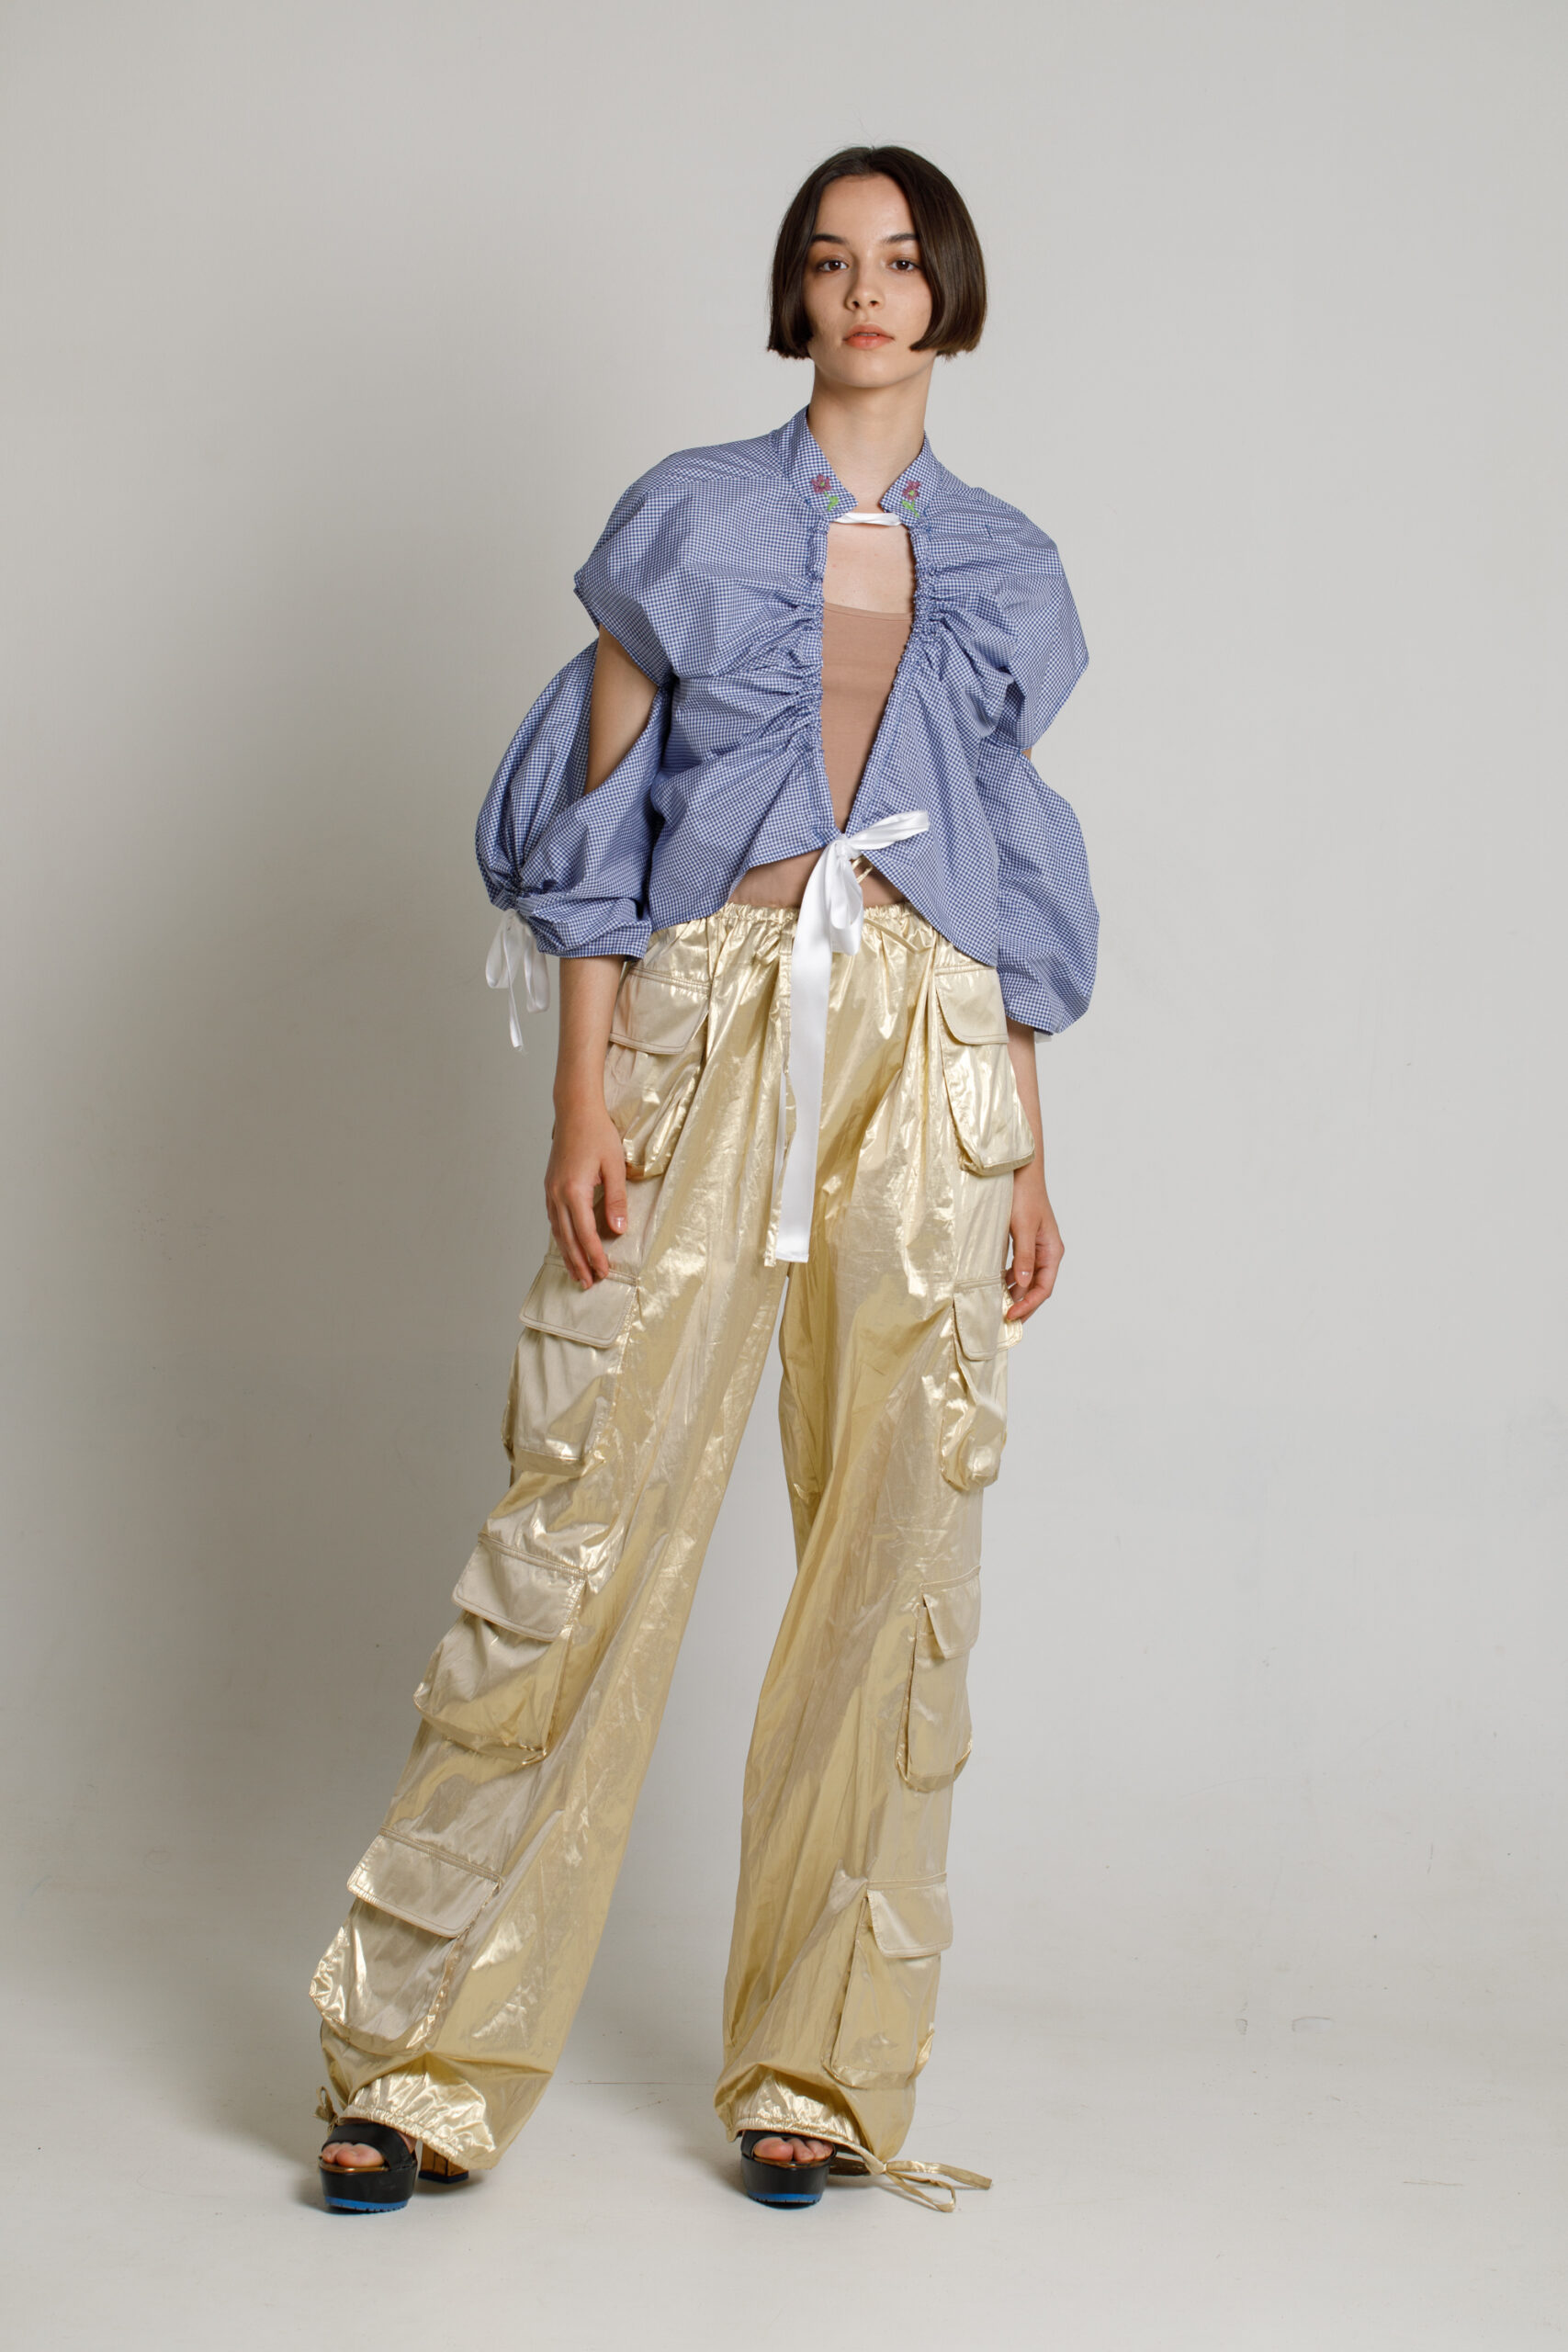 ARDEN elegant cargo pants in golden mackintosh. Natural fabrics, original design, handmade embroidery